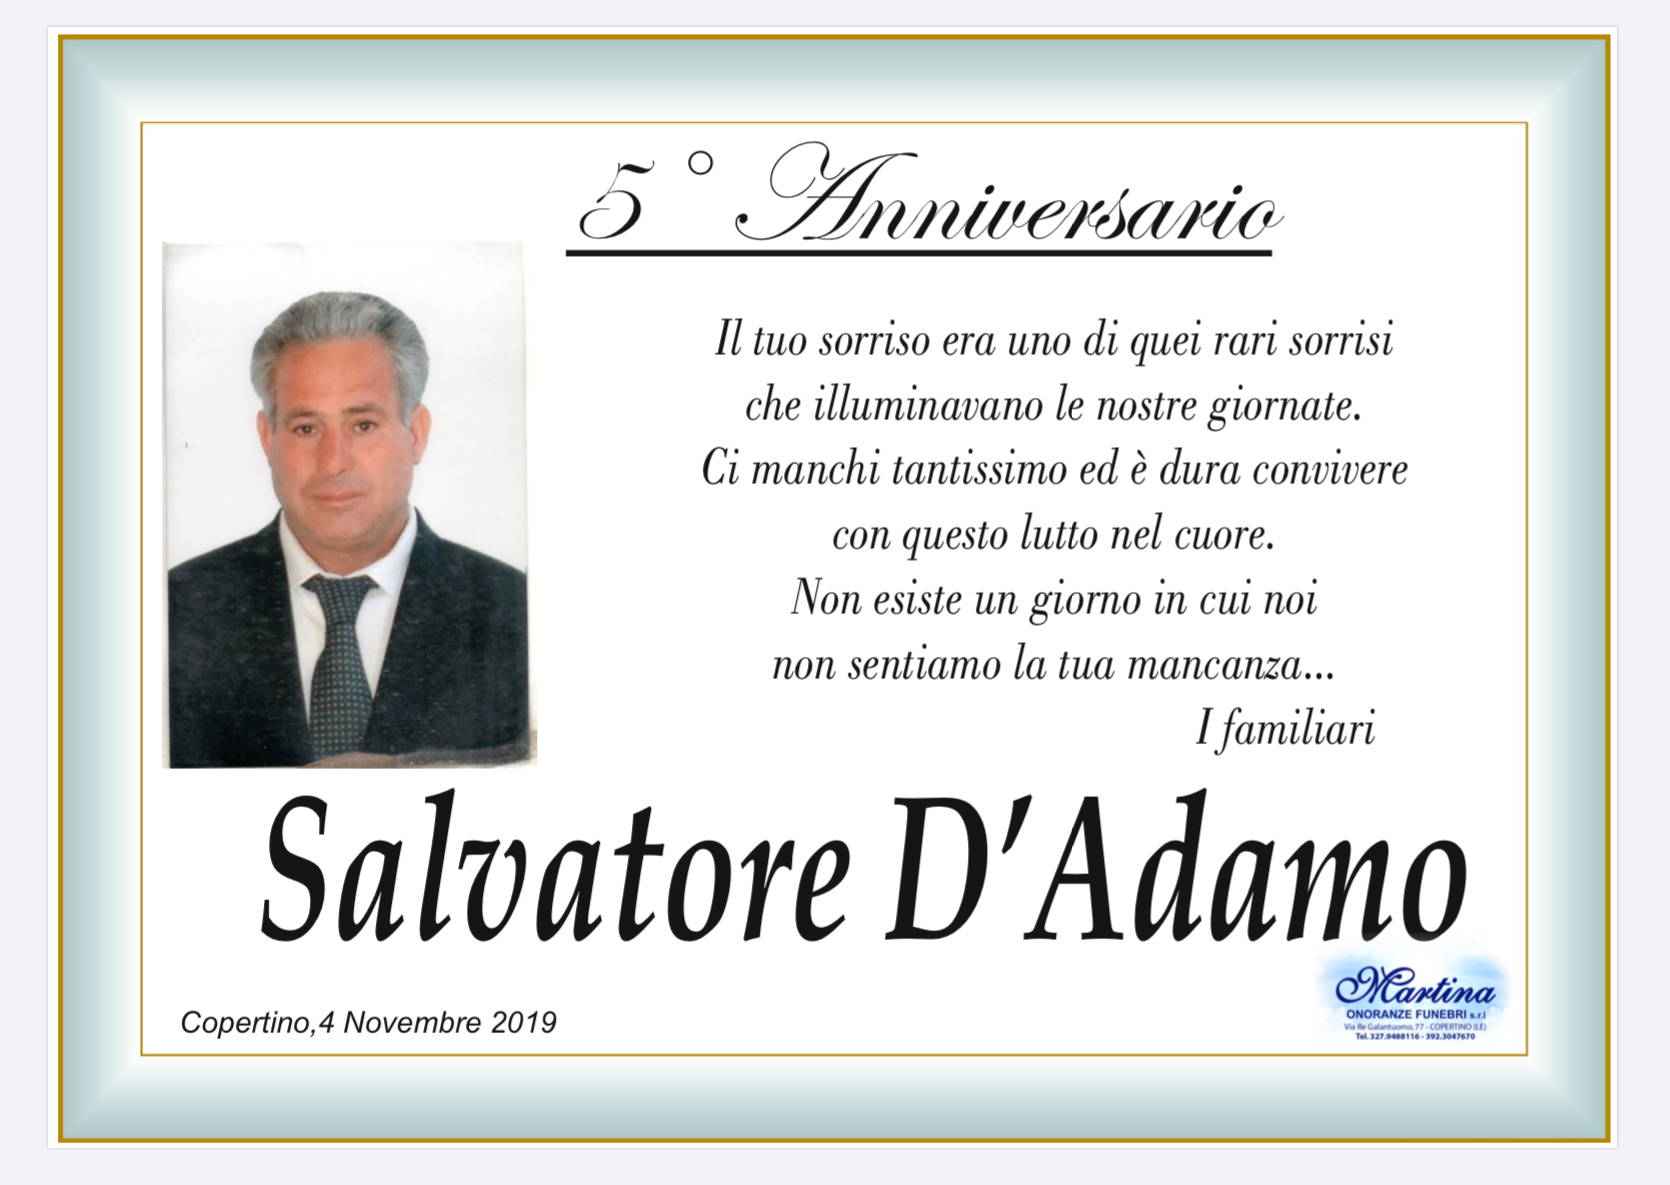 Salvatore DAdamo